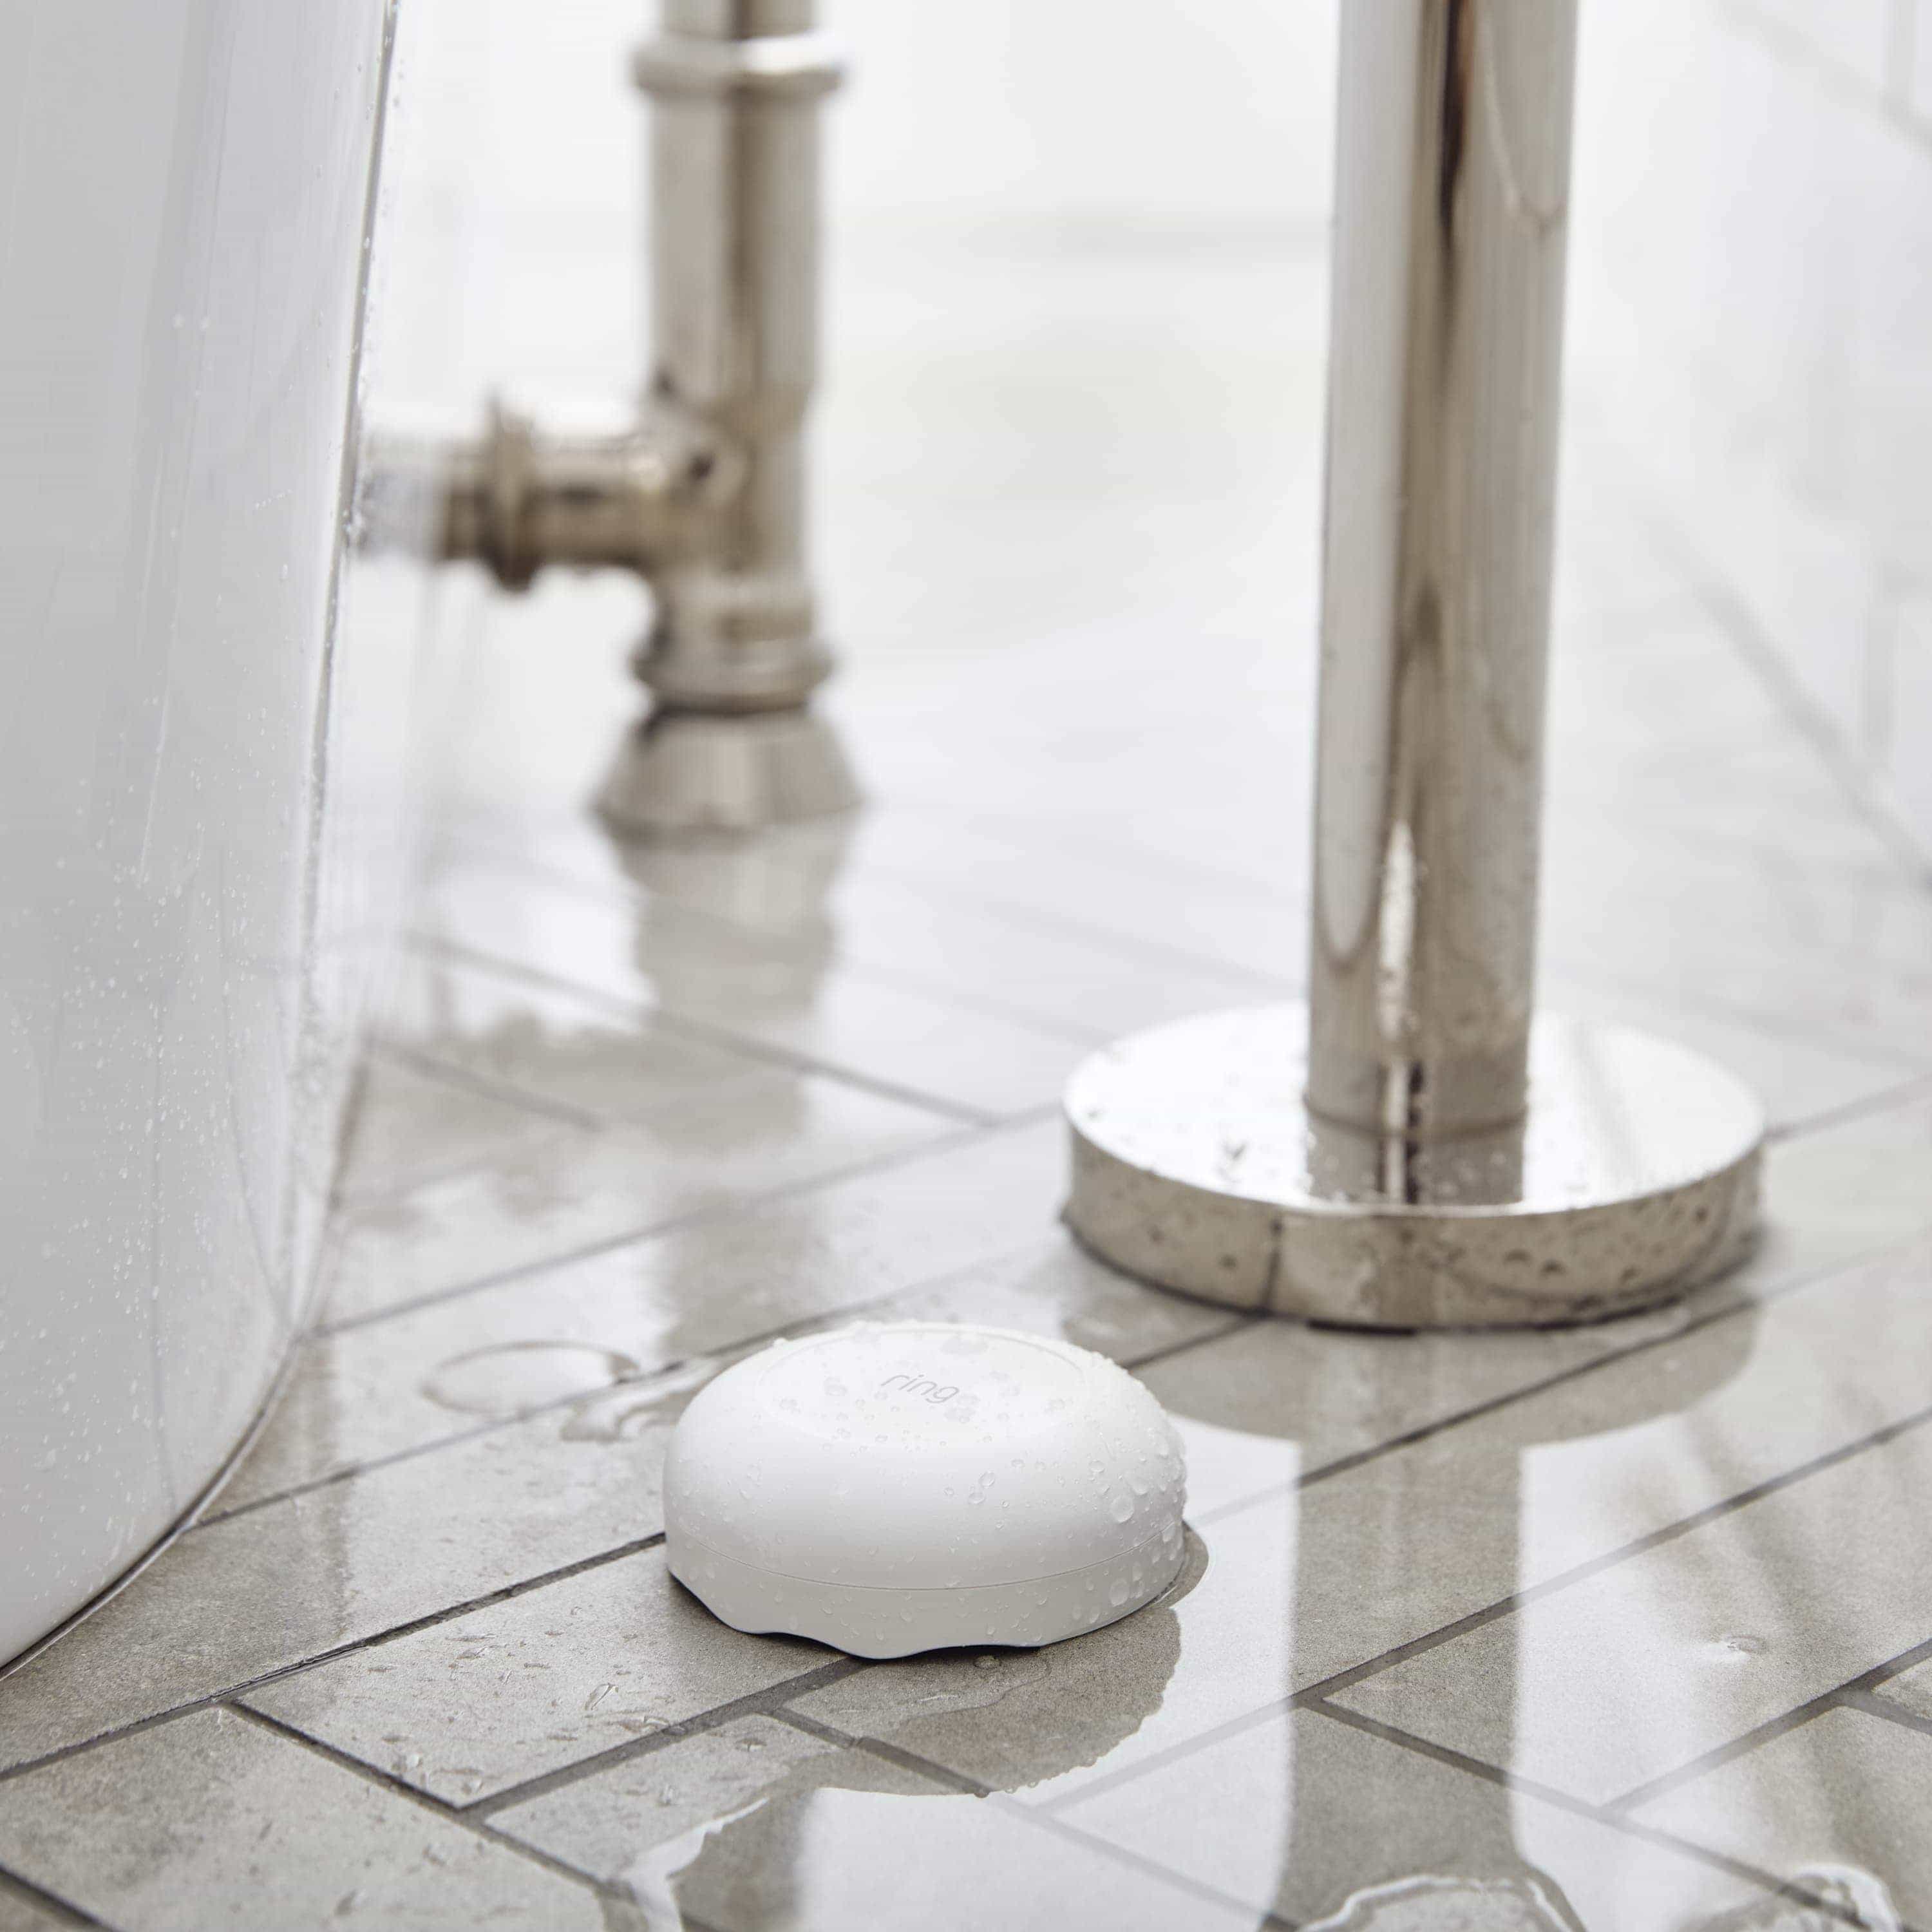 Alarm Flood & Freeze Sensor - Alarm Flood and Freeze Sensor situated on a wet, tiled floor next to a bathtub and plumbing fixtures.